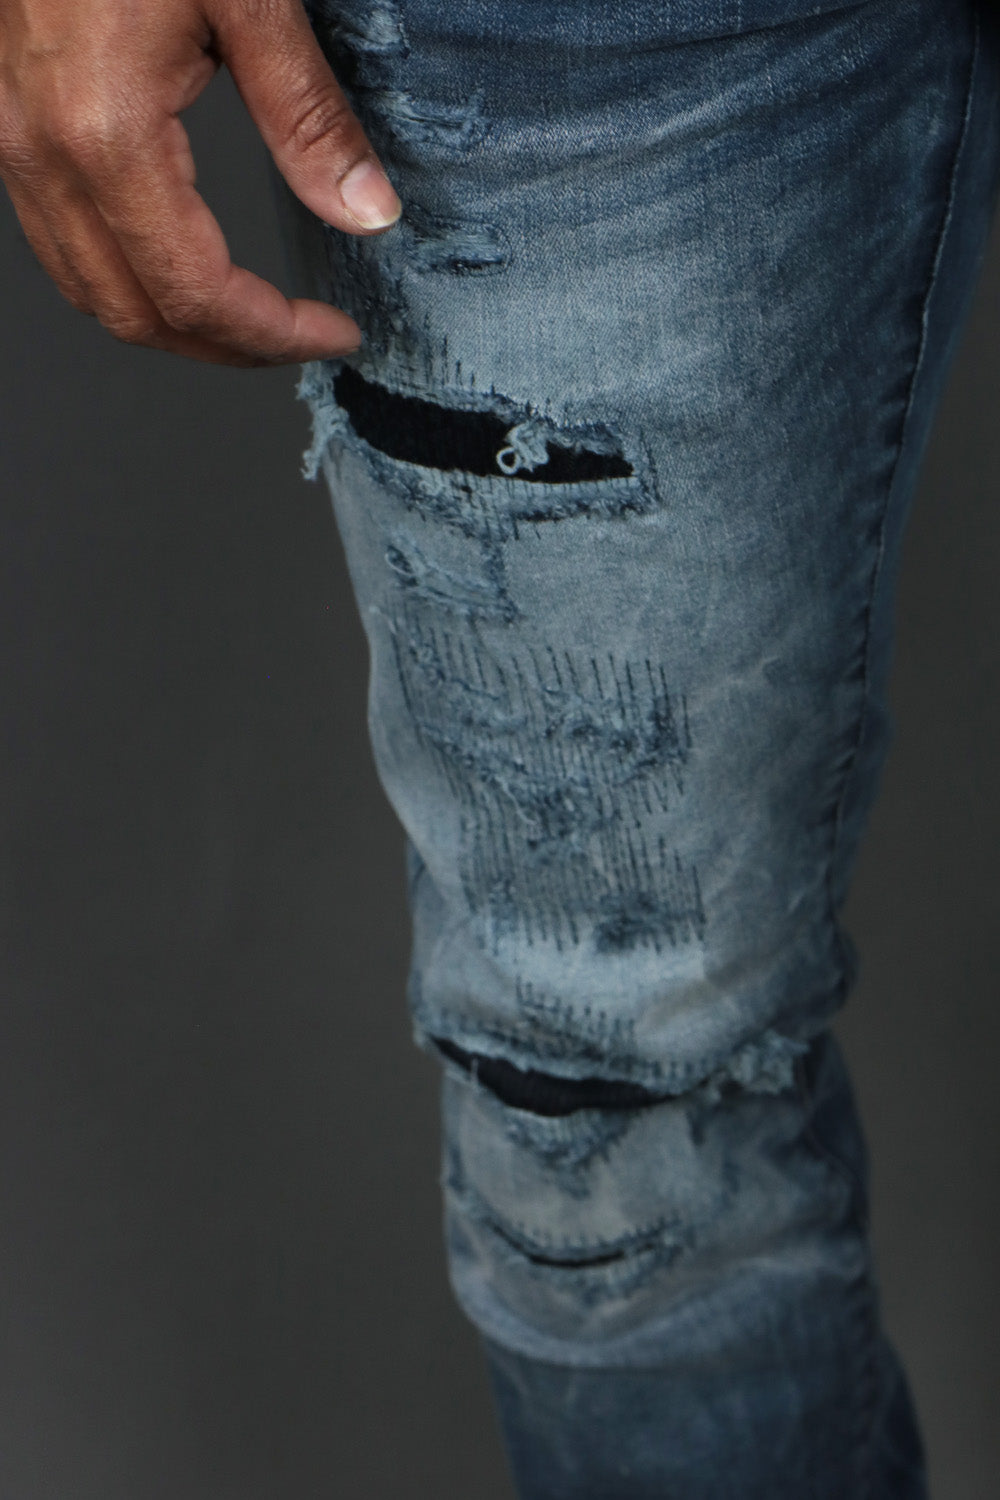 A close up of the ripped leggings on the Deep Blue Distressed Denim Pants | Jordan Craig